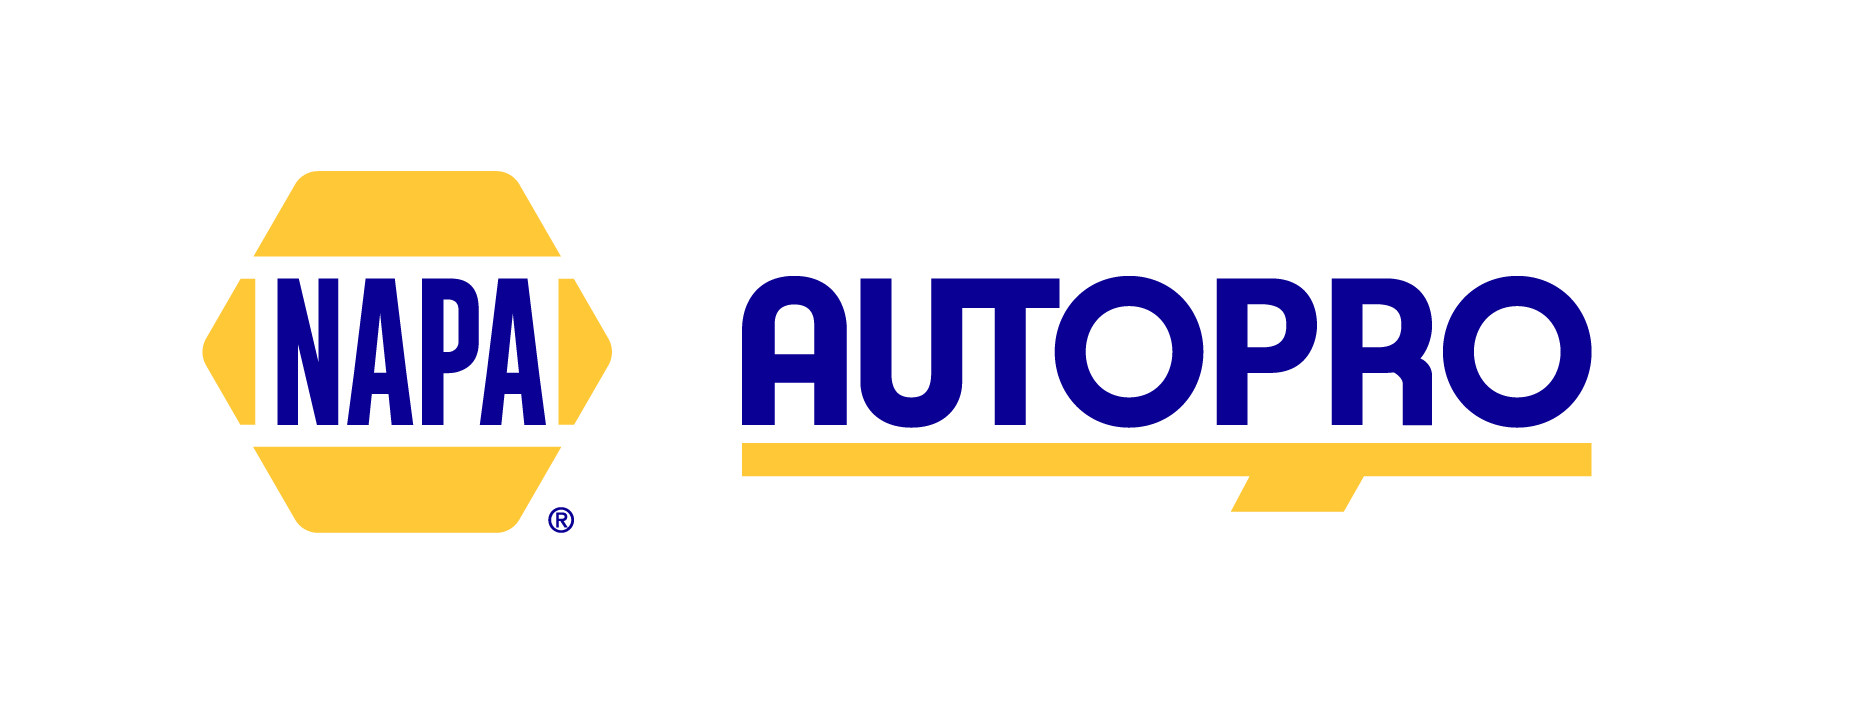 NAPA AUTOPRO logo